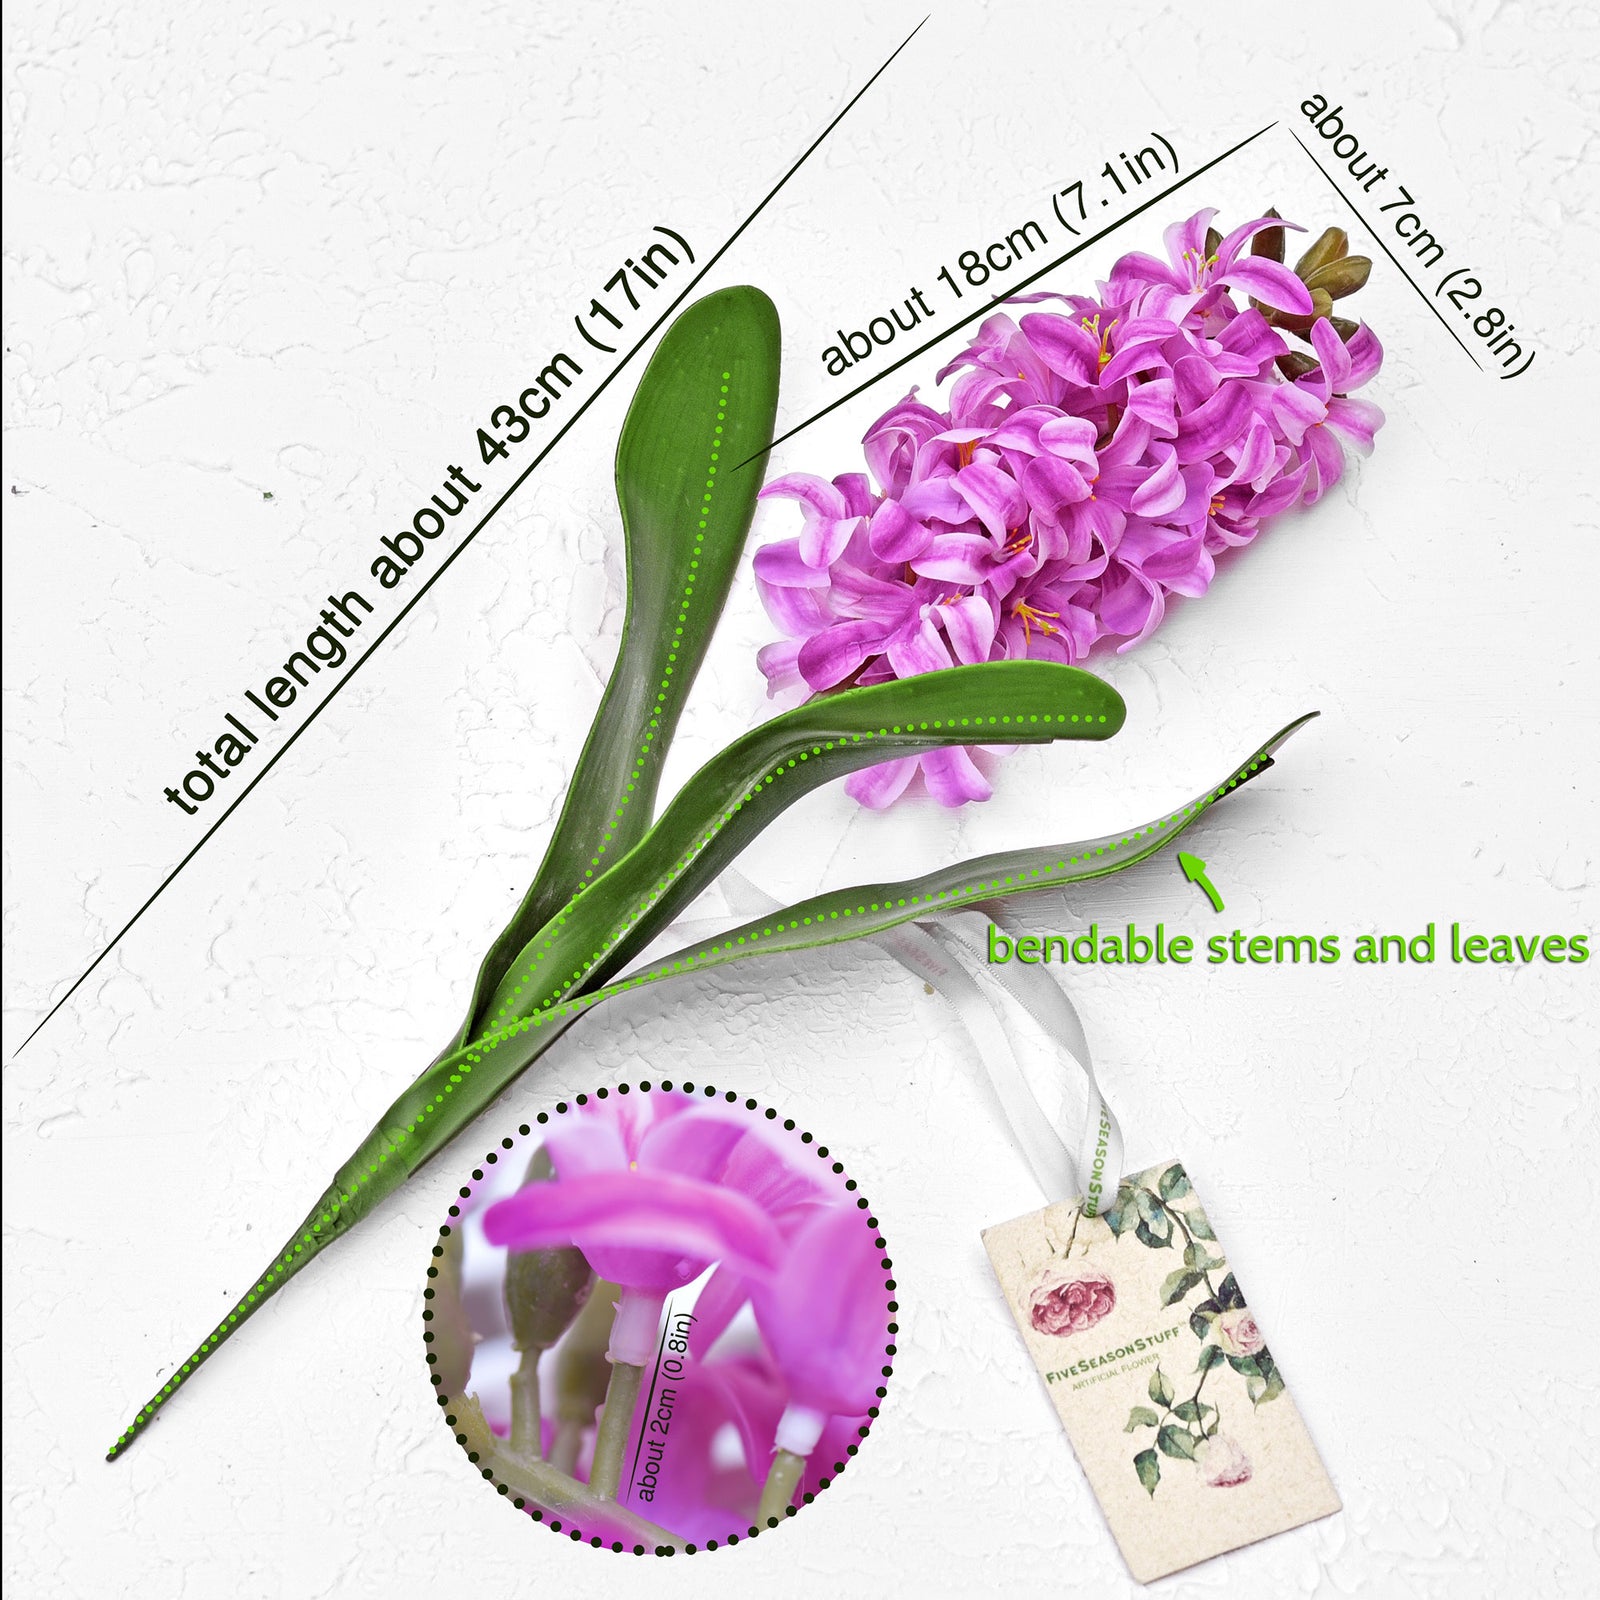 Real Touch Hyacinth (Fuchsia Pink) Artificial Flowers ‘Petals Feel and Look like Fresh Hyacinth' Wedding, Home Decor, Arrangement 2 Stems -FiveSeasonStuff